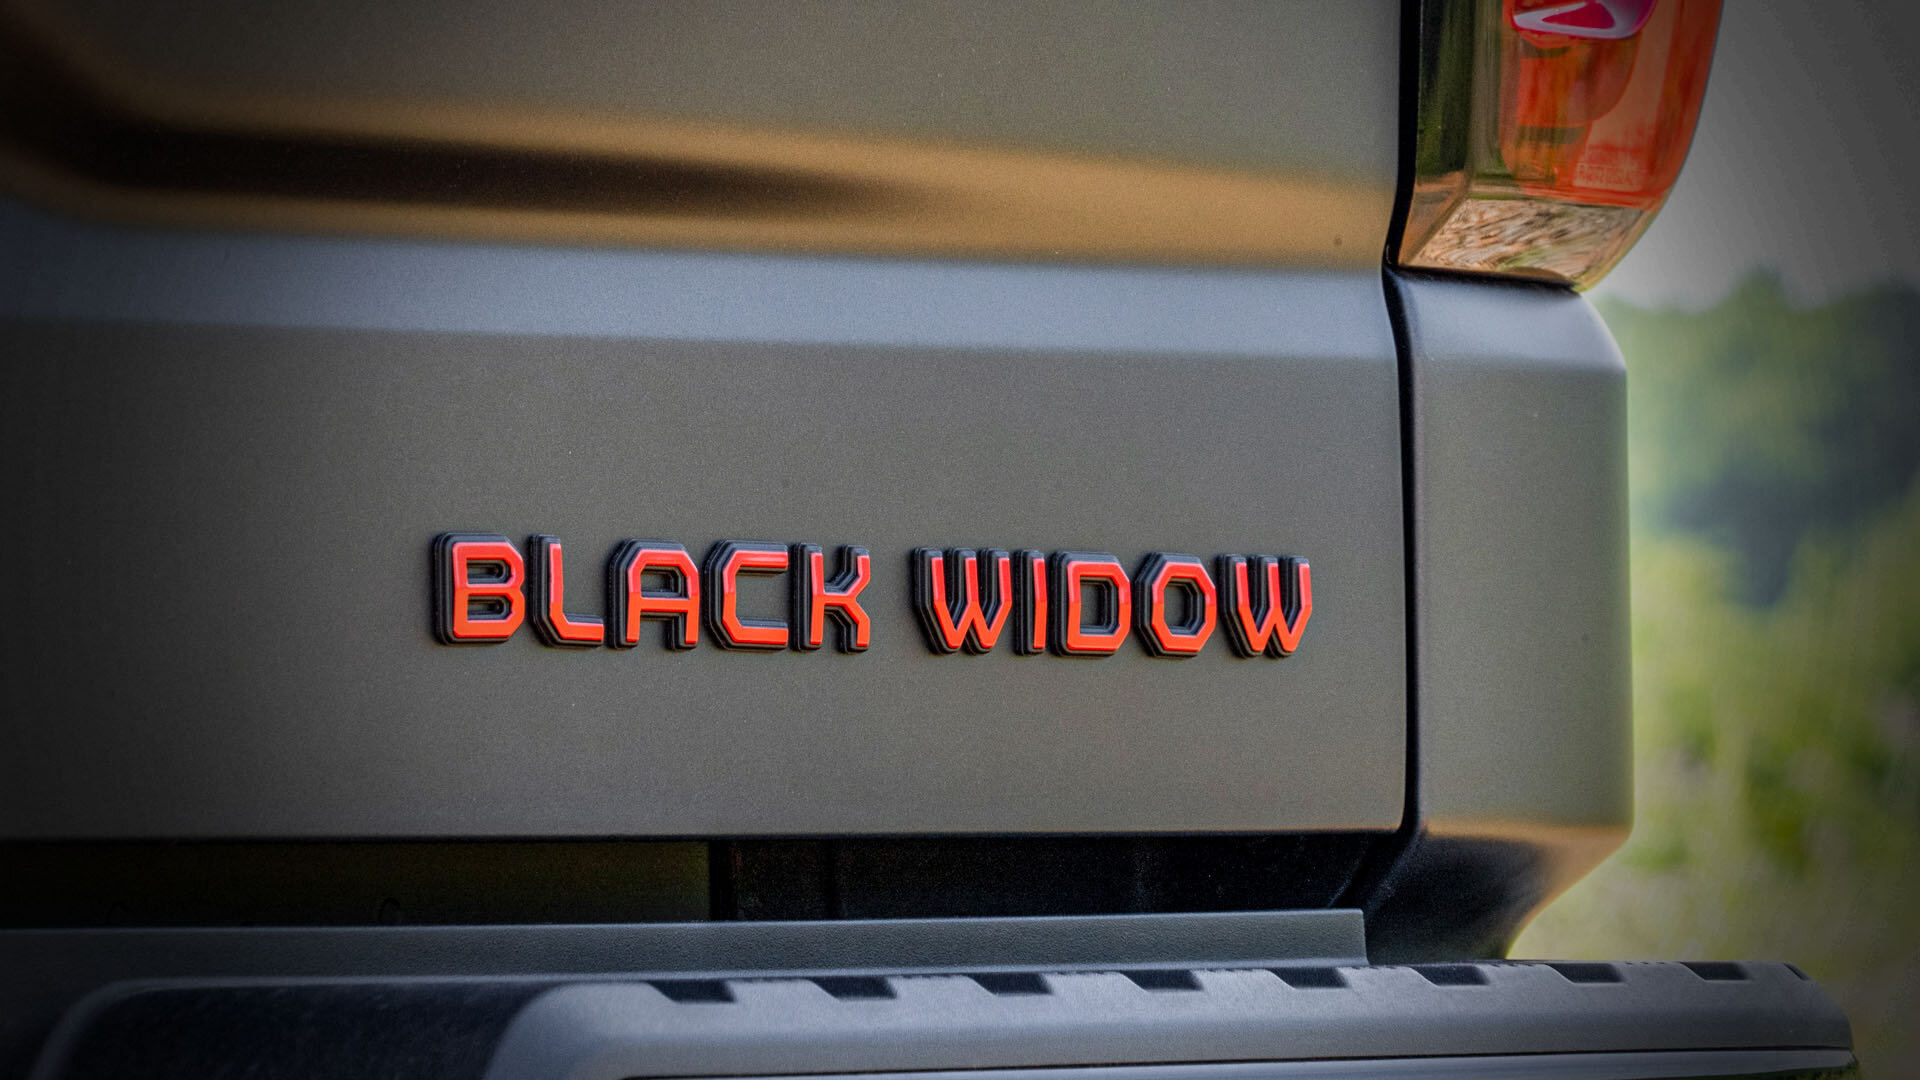 Black Widow Limited Badging